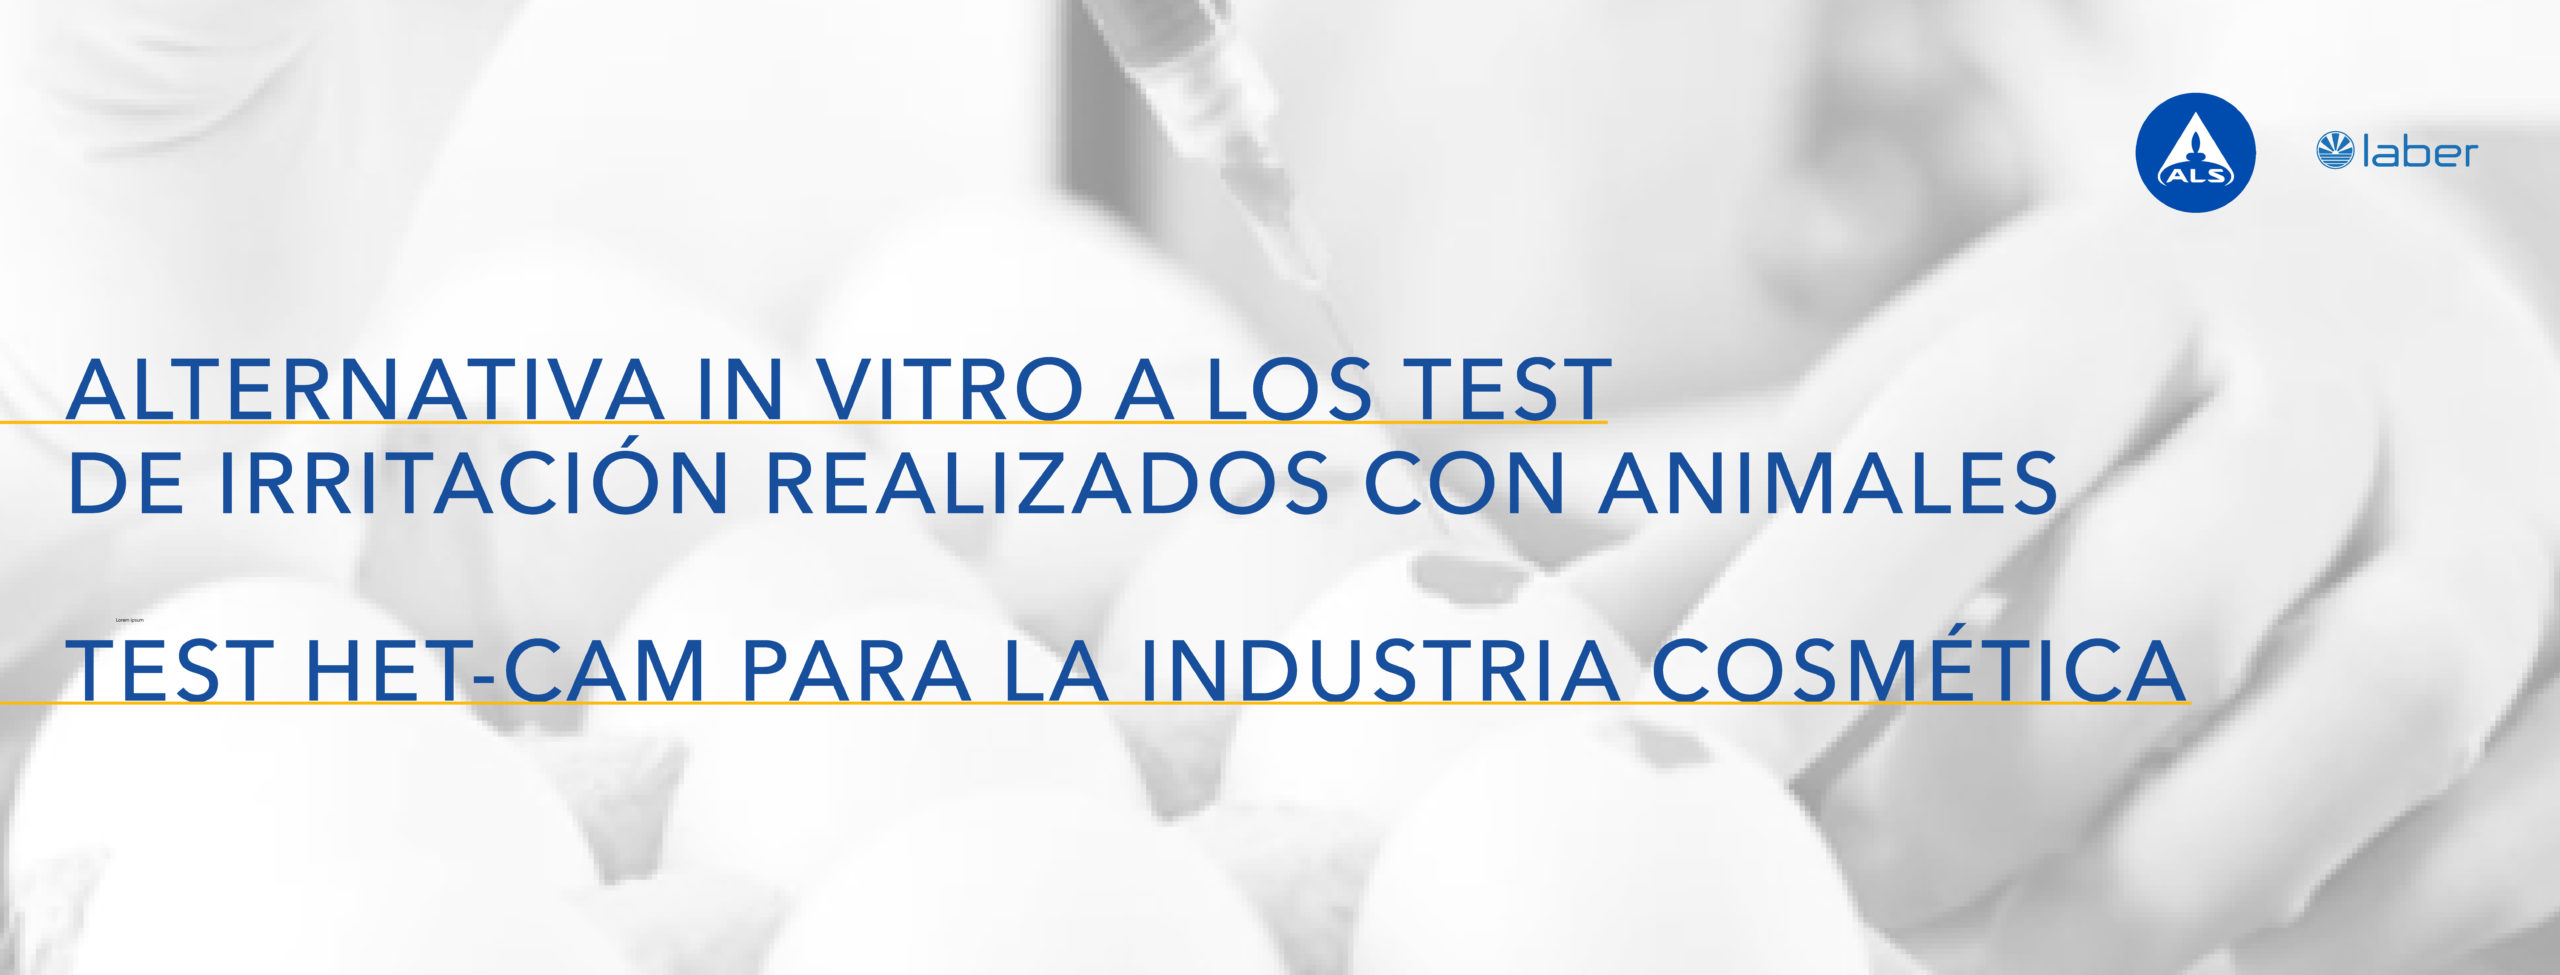 Alternativa a los test de irritacion con animales, test HET-CAM industria cosmética, ALS Laber